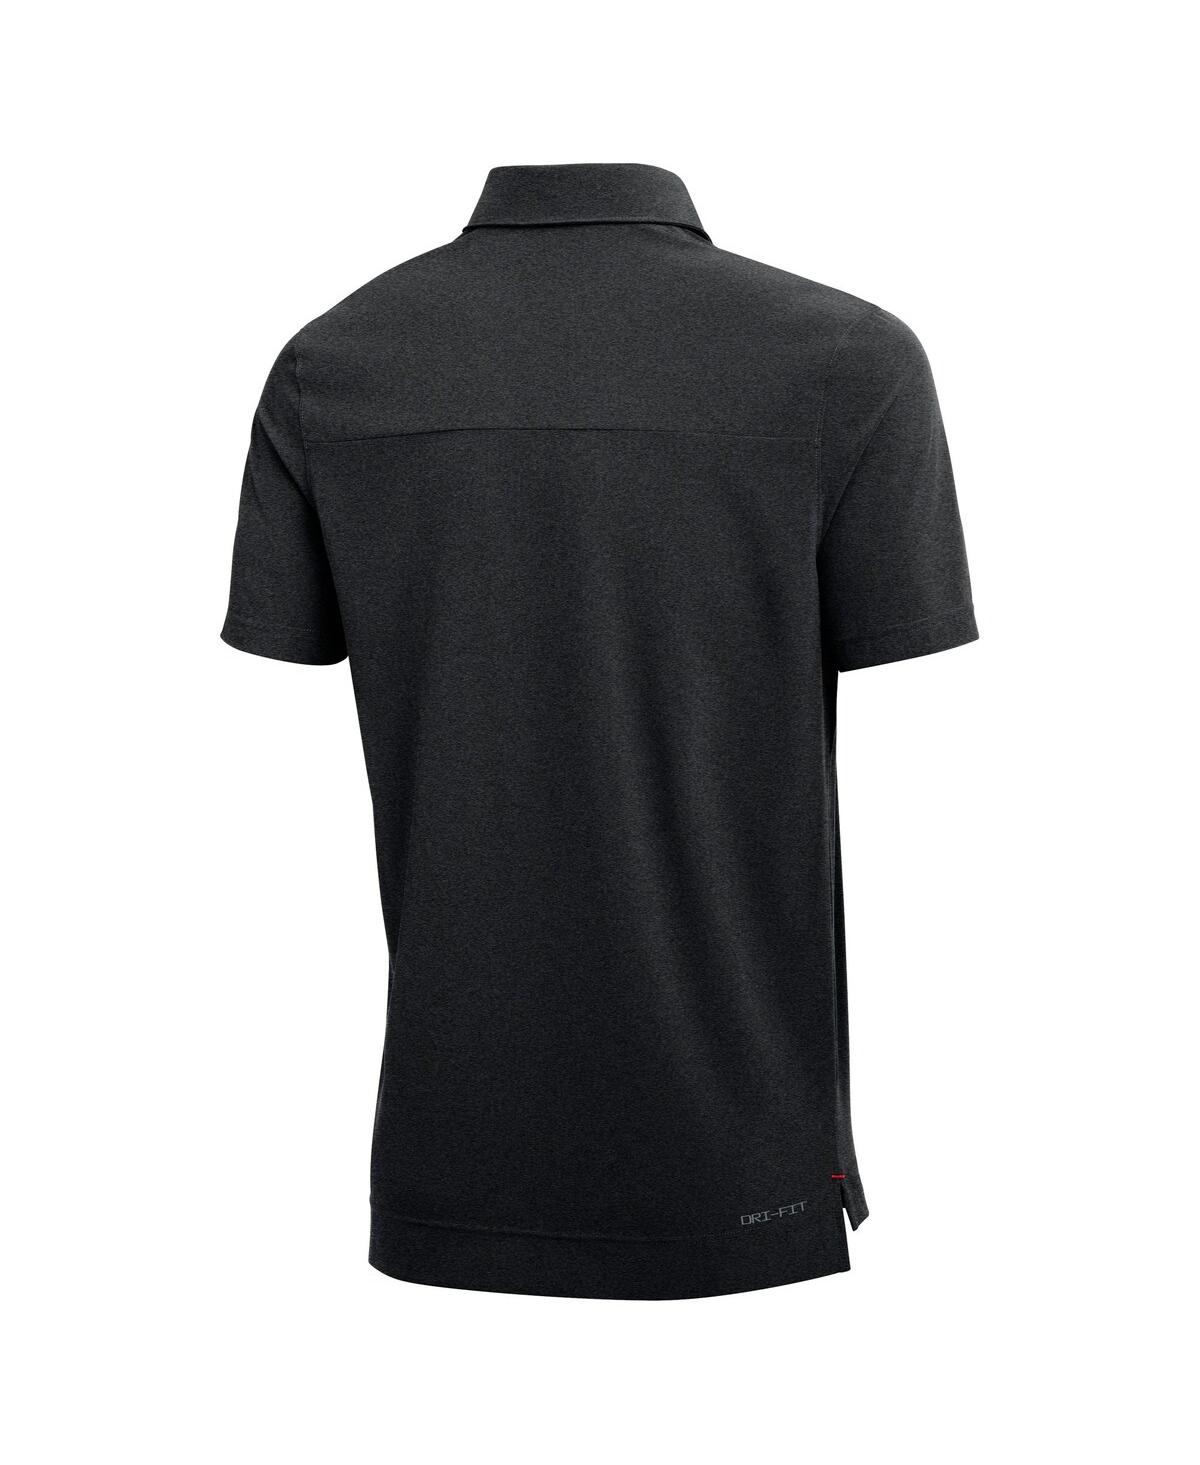 Shop Nike Men's  Heathered Black Ohio State Buckeyes Coach Performance Polo Shirt